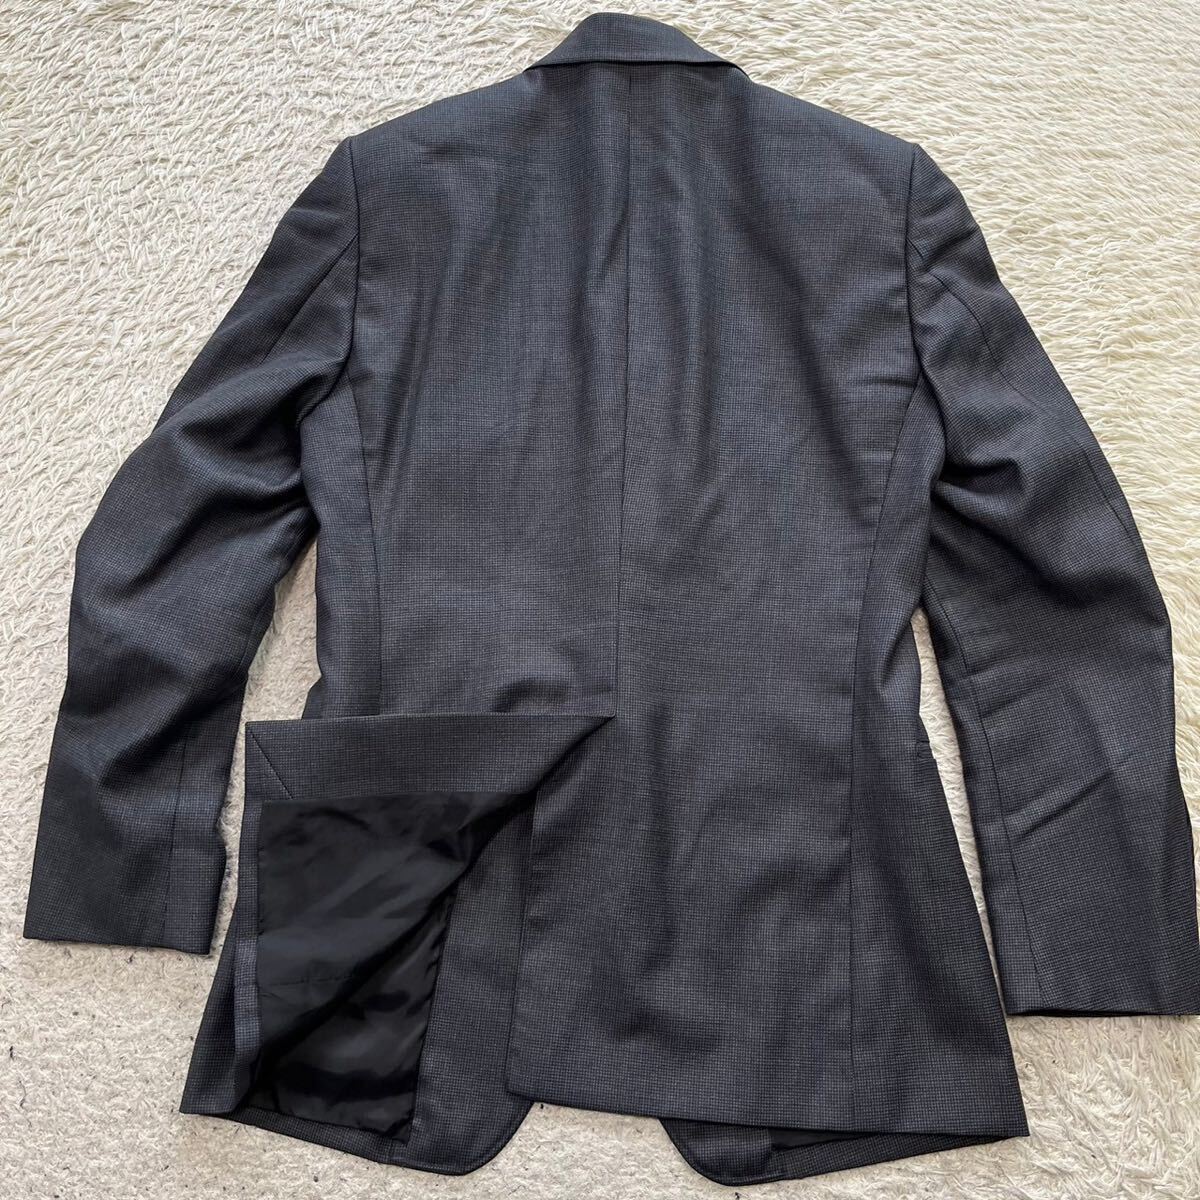  Emporio Armani [. высота. NAPOLI LINE]EMPORIO ARMANI костюм выставить tailored jacket проверка style общий рисунок серый 